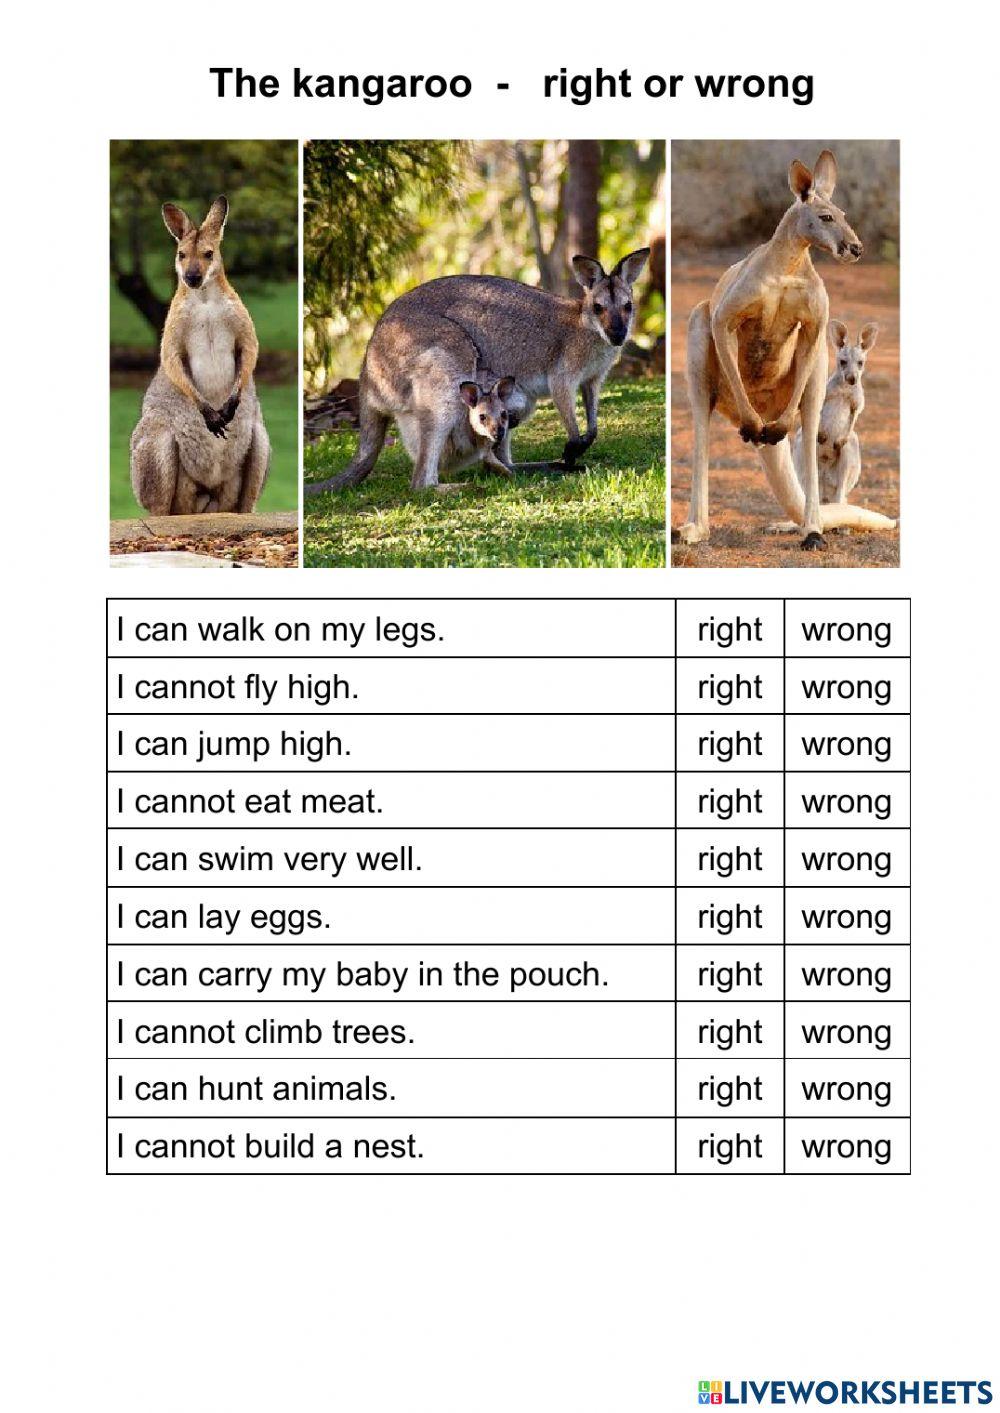 The kangaroo - right or wrong